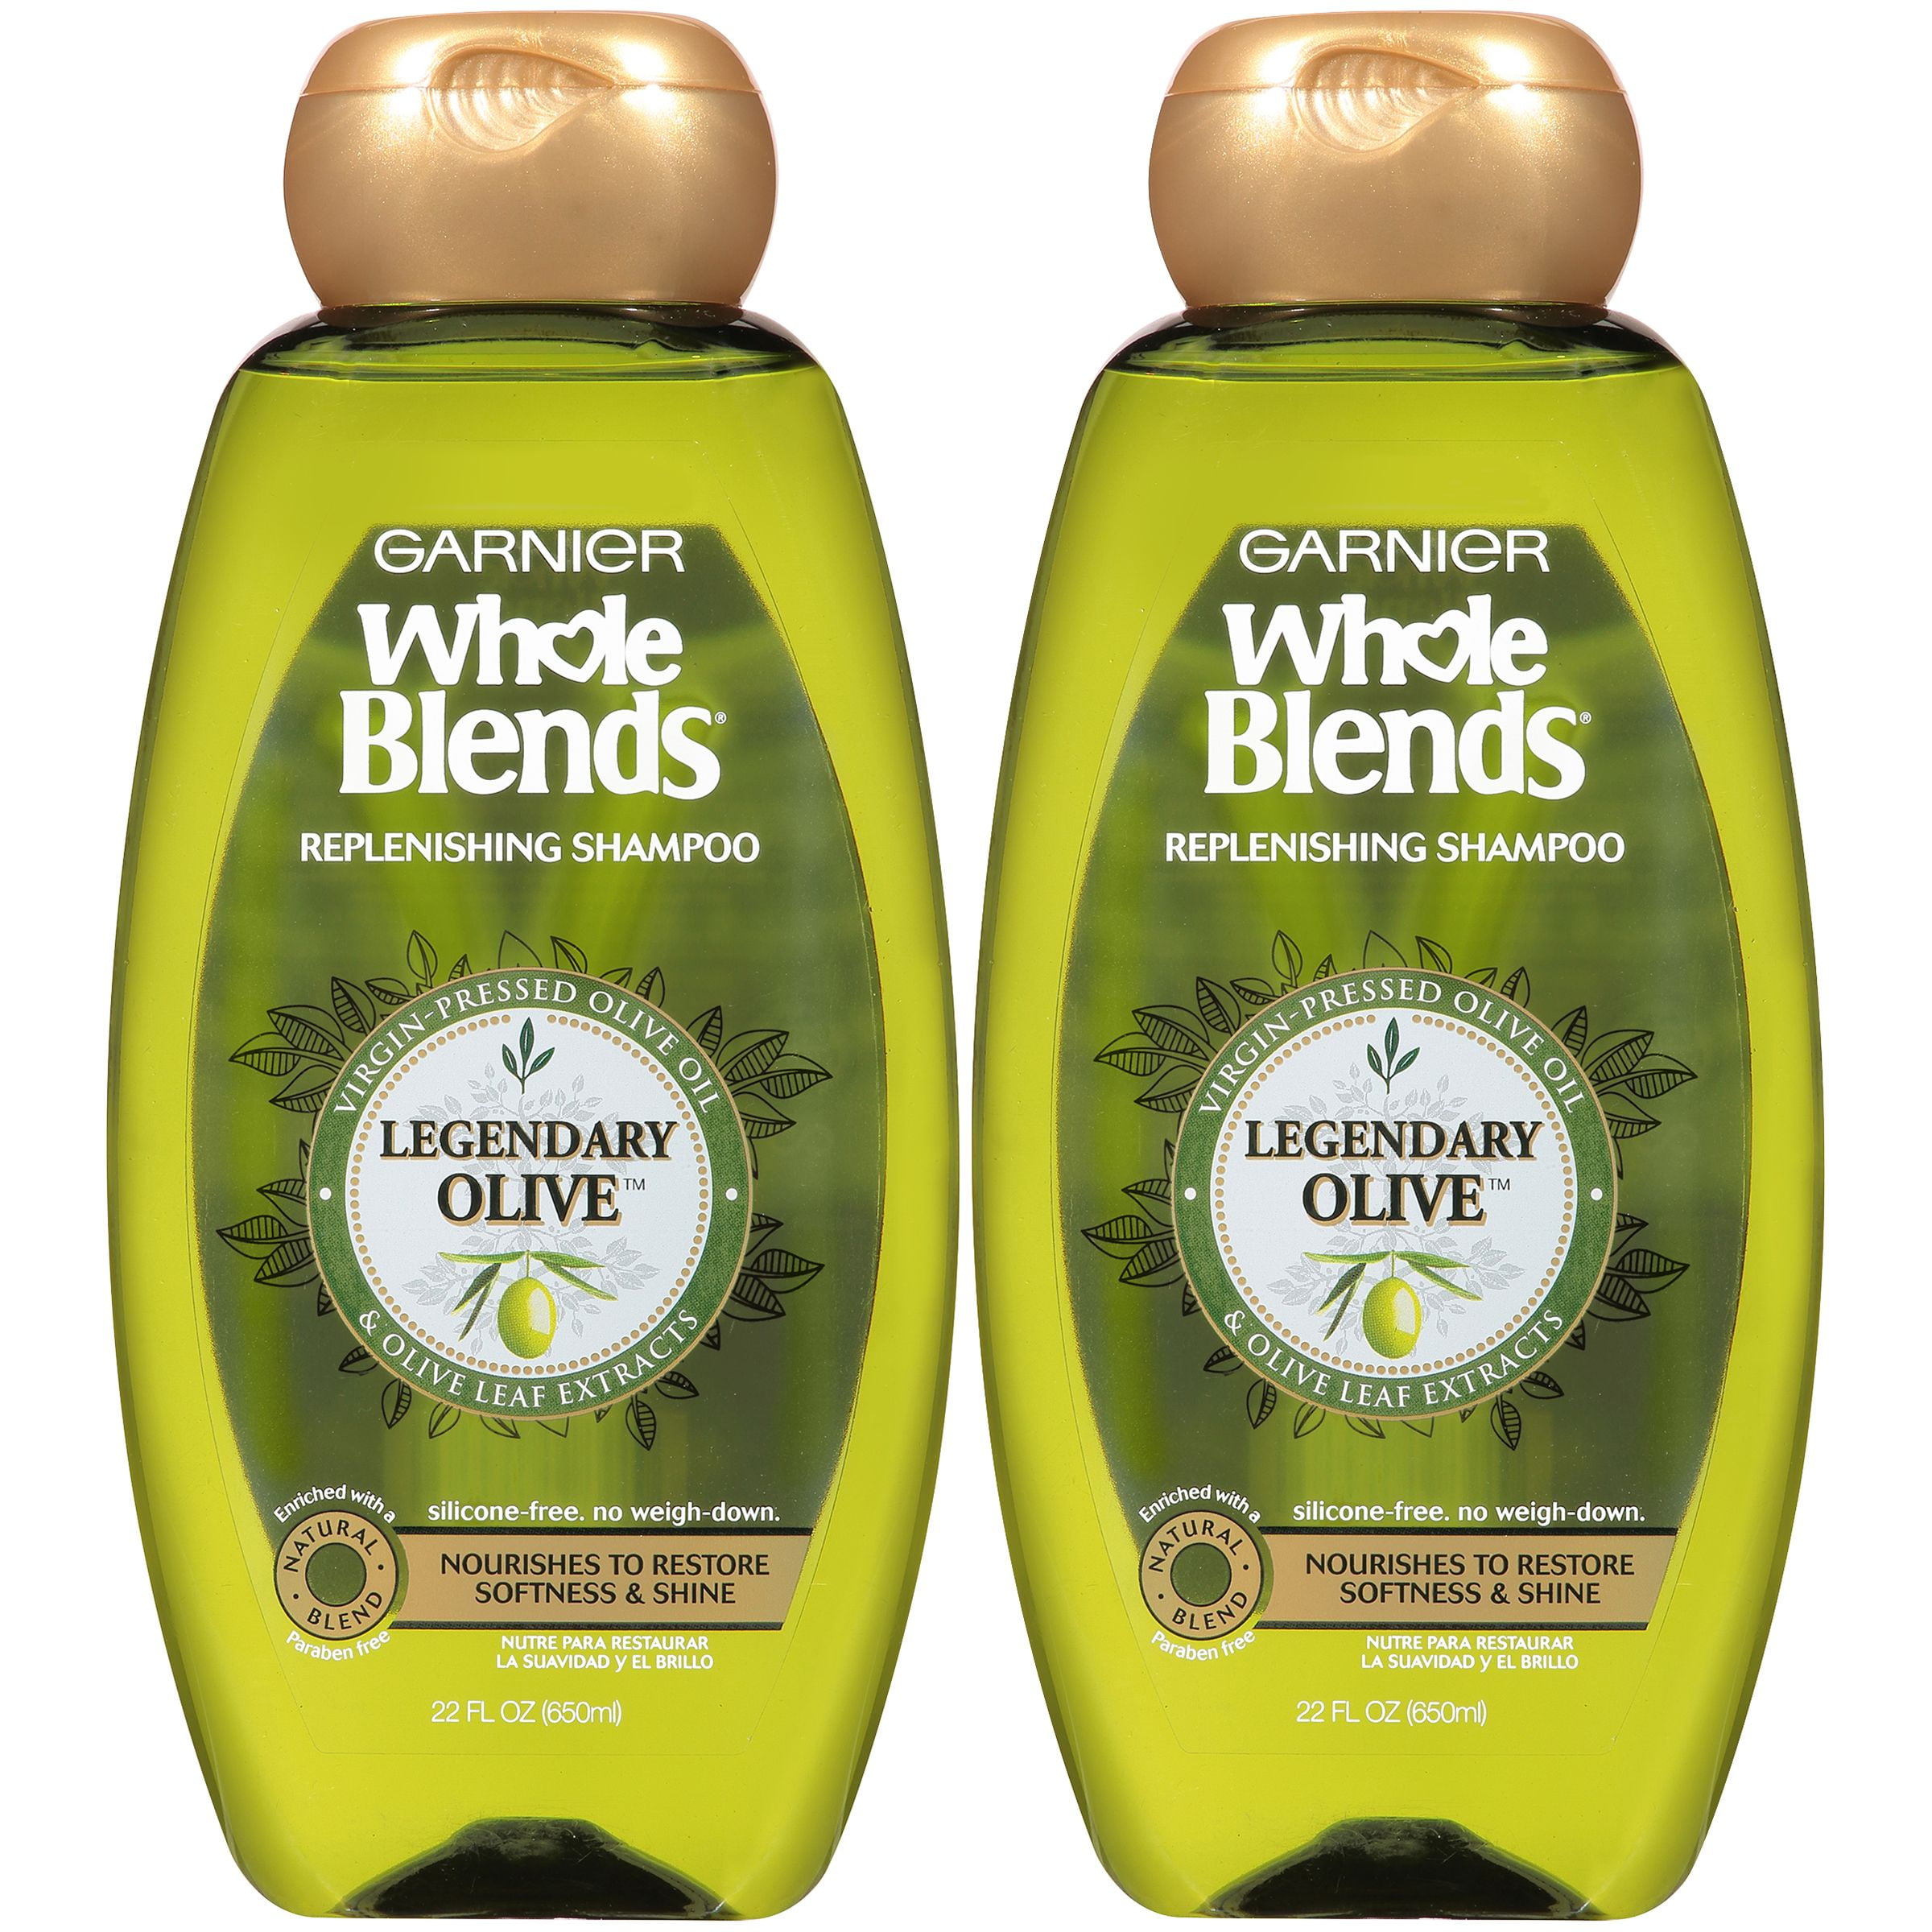 Garnier Whole Blends Replenishing Shampoo Legendary Olive, For Hair, 2 count - Walmart.com